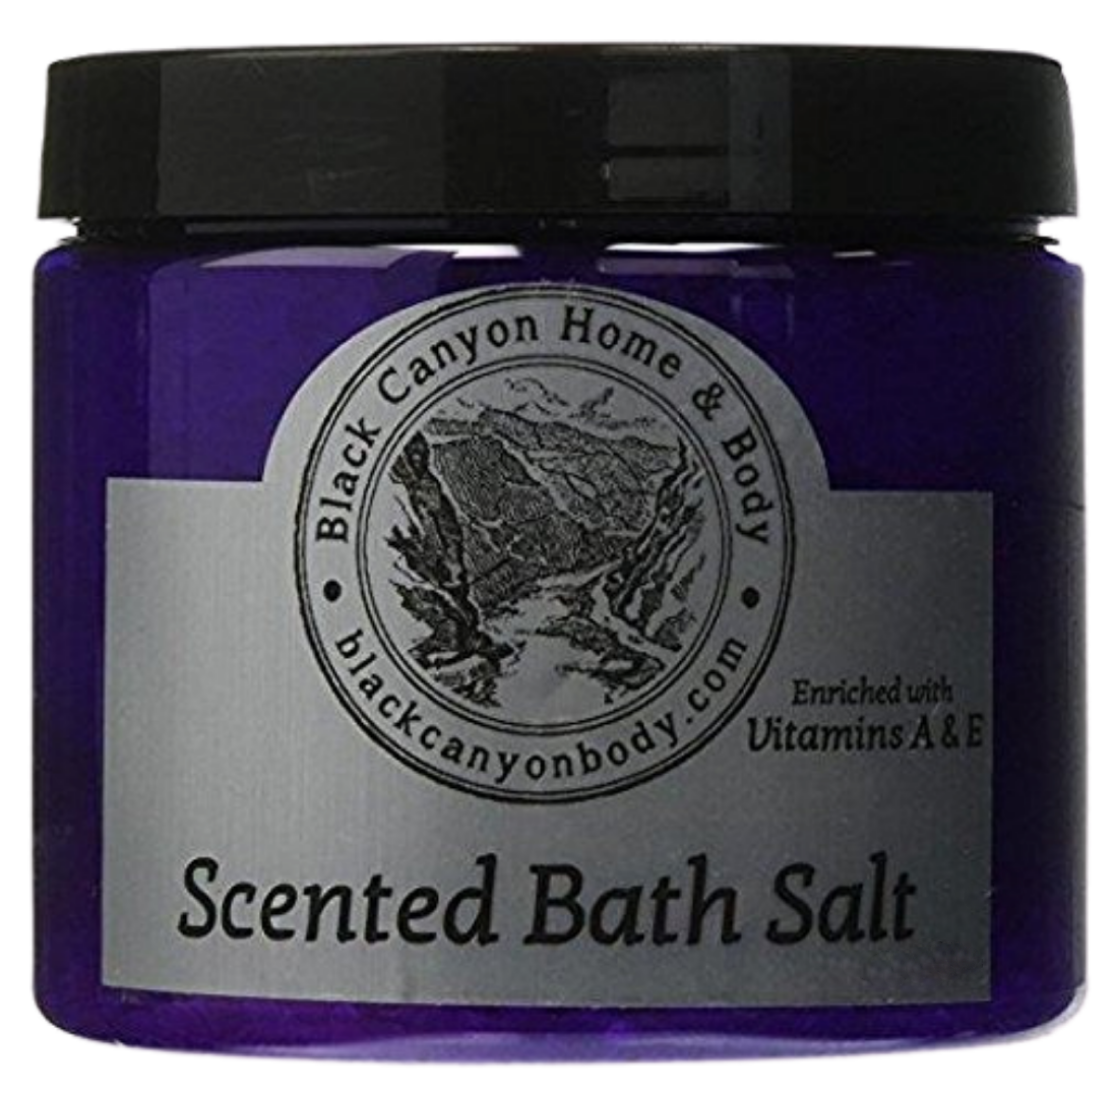 Black Canyon Black Currant & Rose Scented Sea Salt Bath Soak